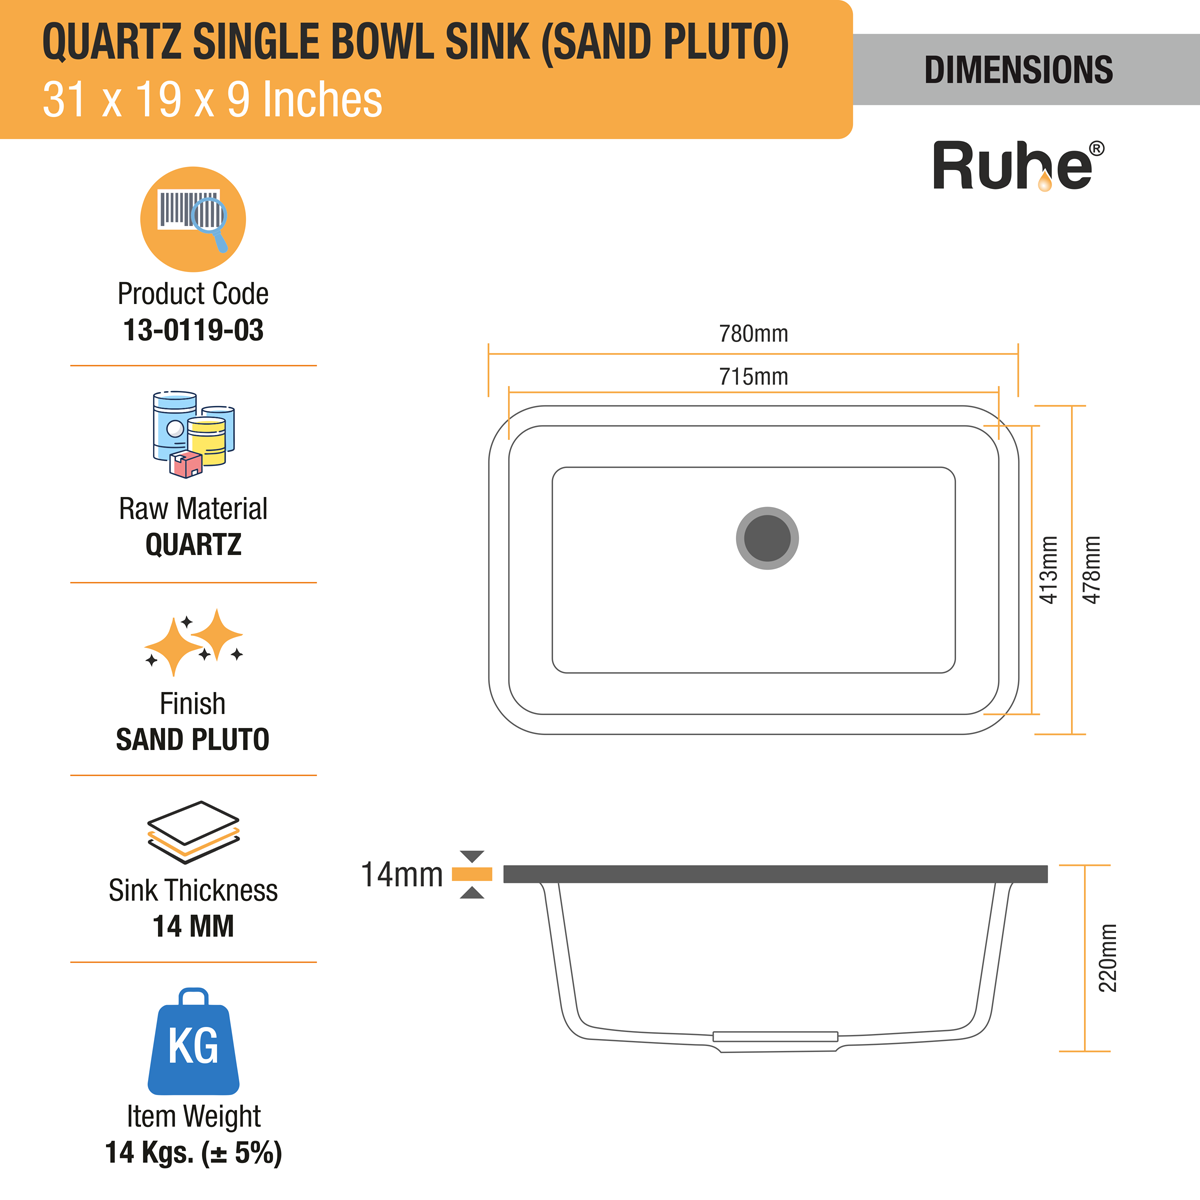 Quartz Single Bowl Kitchen Sink - Sand Pluto (31 x 19 x 9 inches) - by Ruhe®